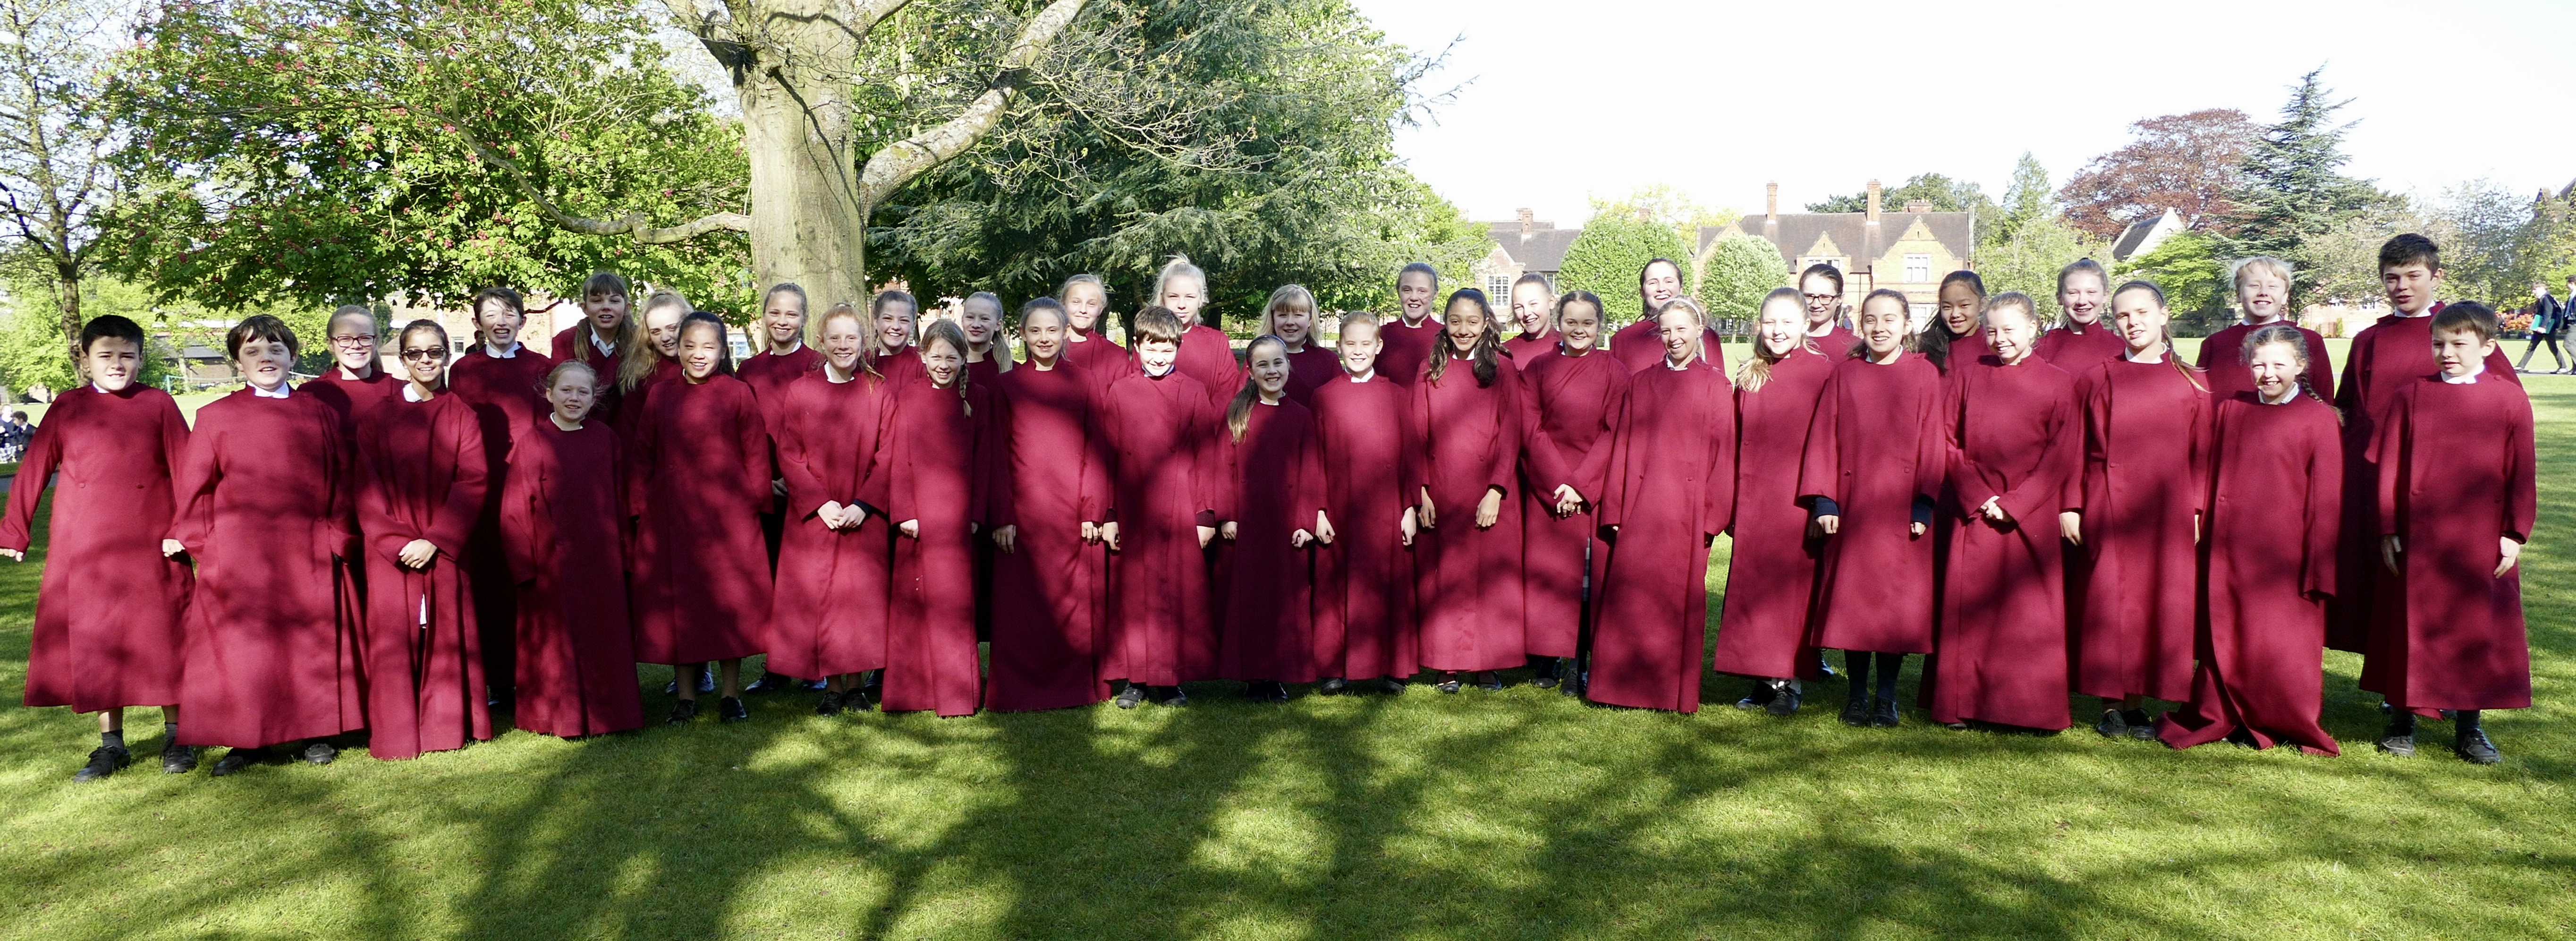 Prep Junior Choir and Chapel Choir at the Cheltenham Music Festival, May 2017